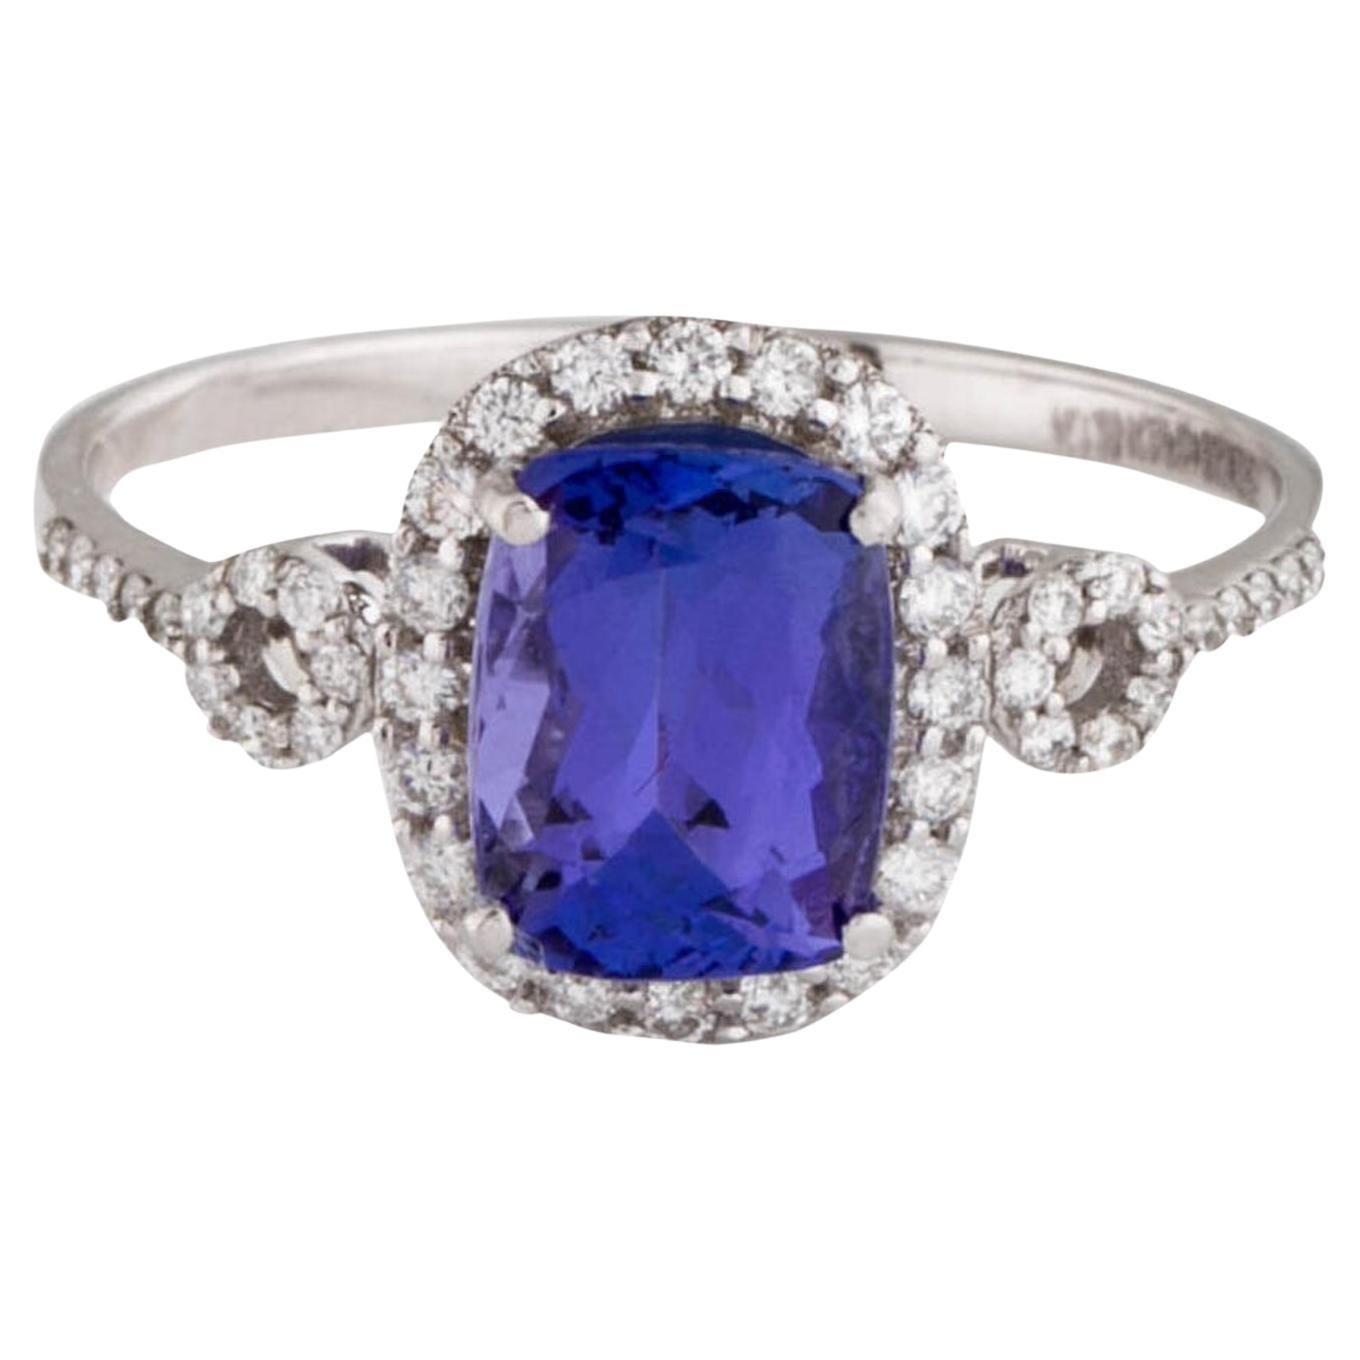 Stunning 14K Tanzanite & Diamond Cocktail Ring 1.70ctw, Size 7 - Elegant Jewelry For Sale